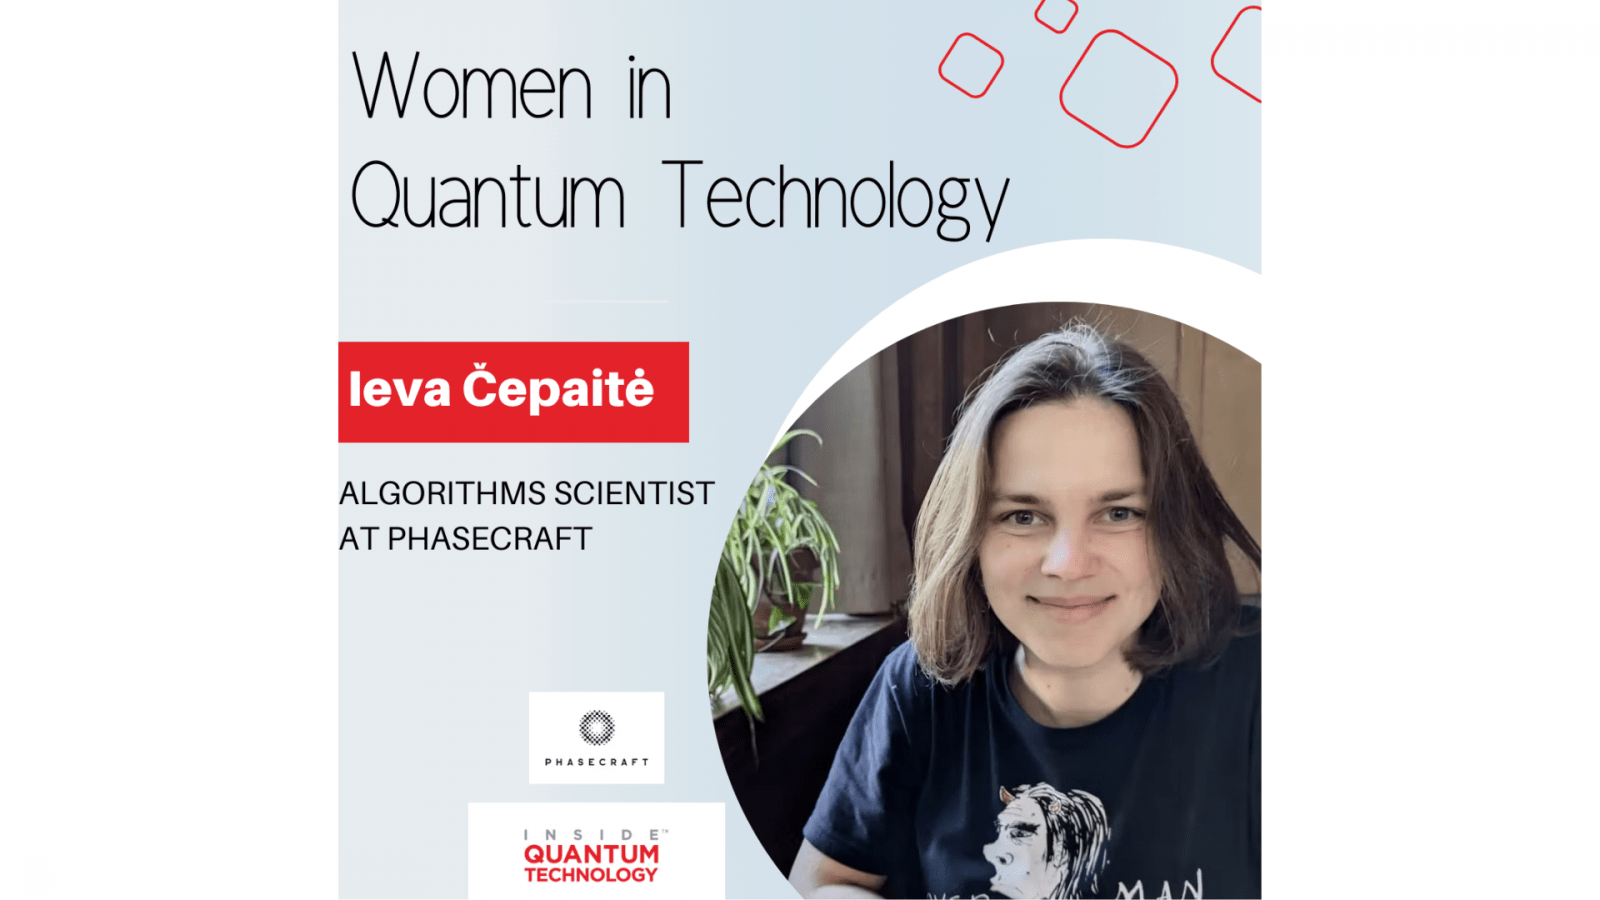 Women of Quantum Technology: Ieva Čepaitė, of Phasecraft - Inside Quantum Technology